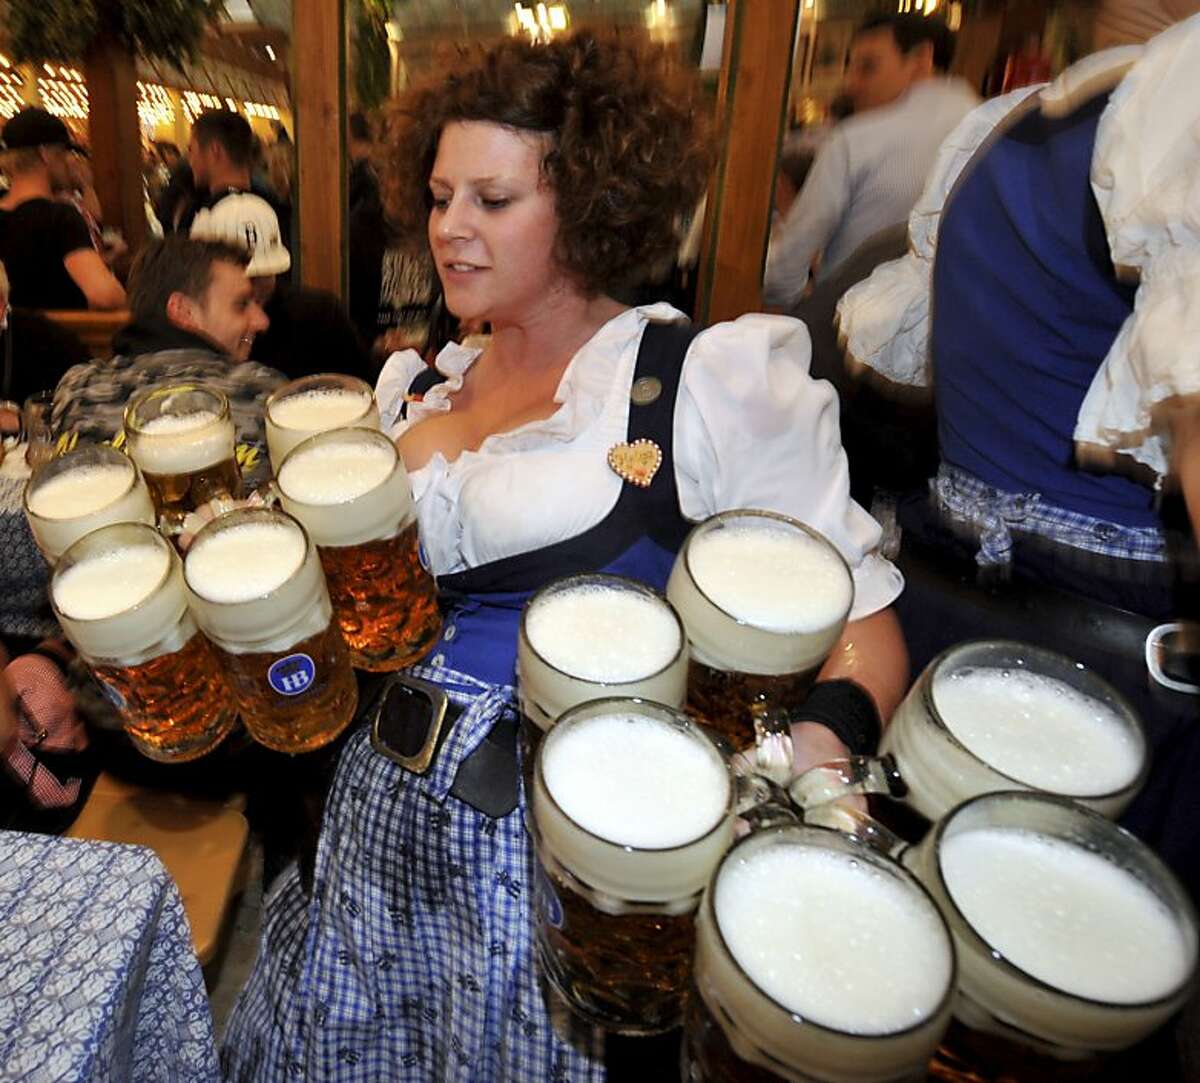 Пиво евротур германия фото